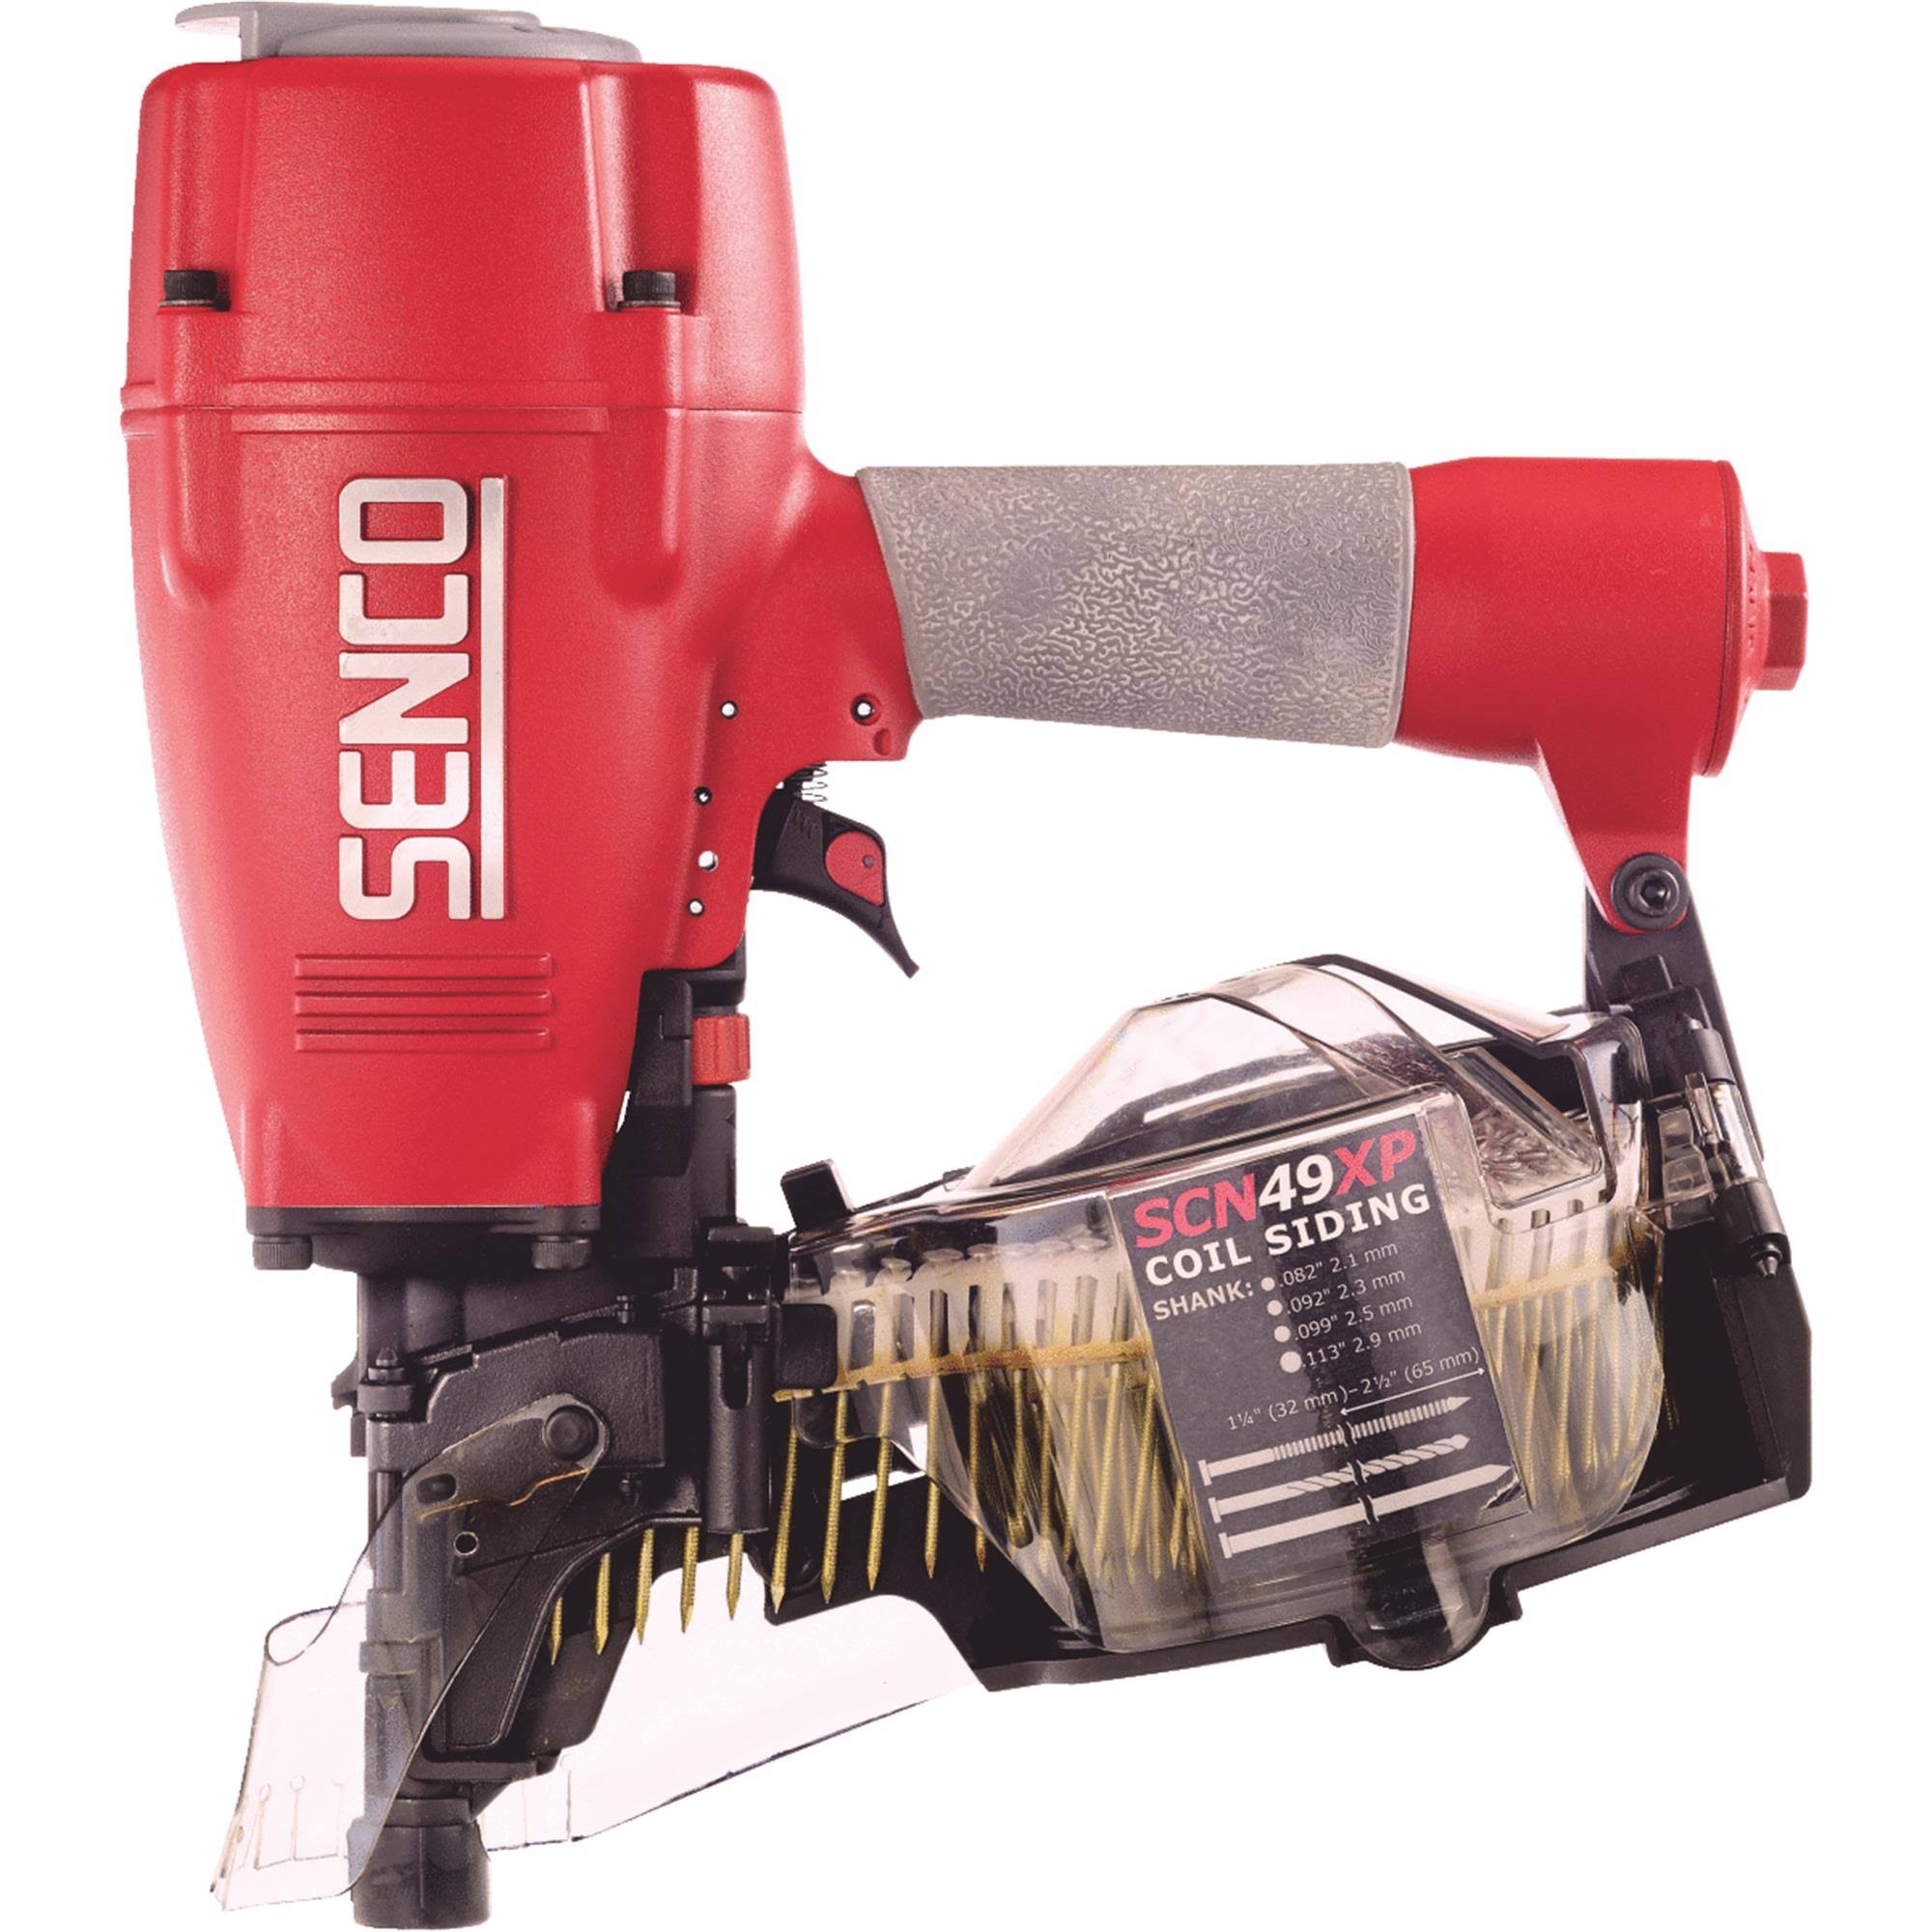 Senco Products Scn49 Frh Coil Siding Nailer - 32mm-65mm